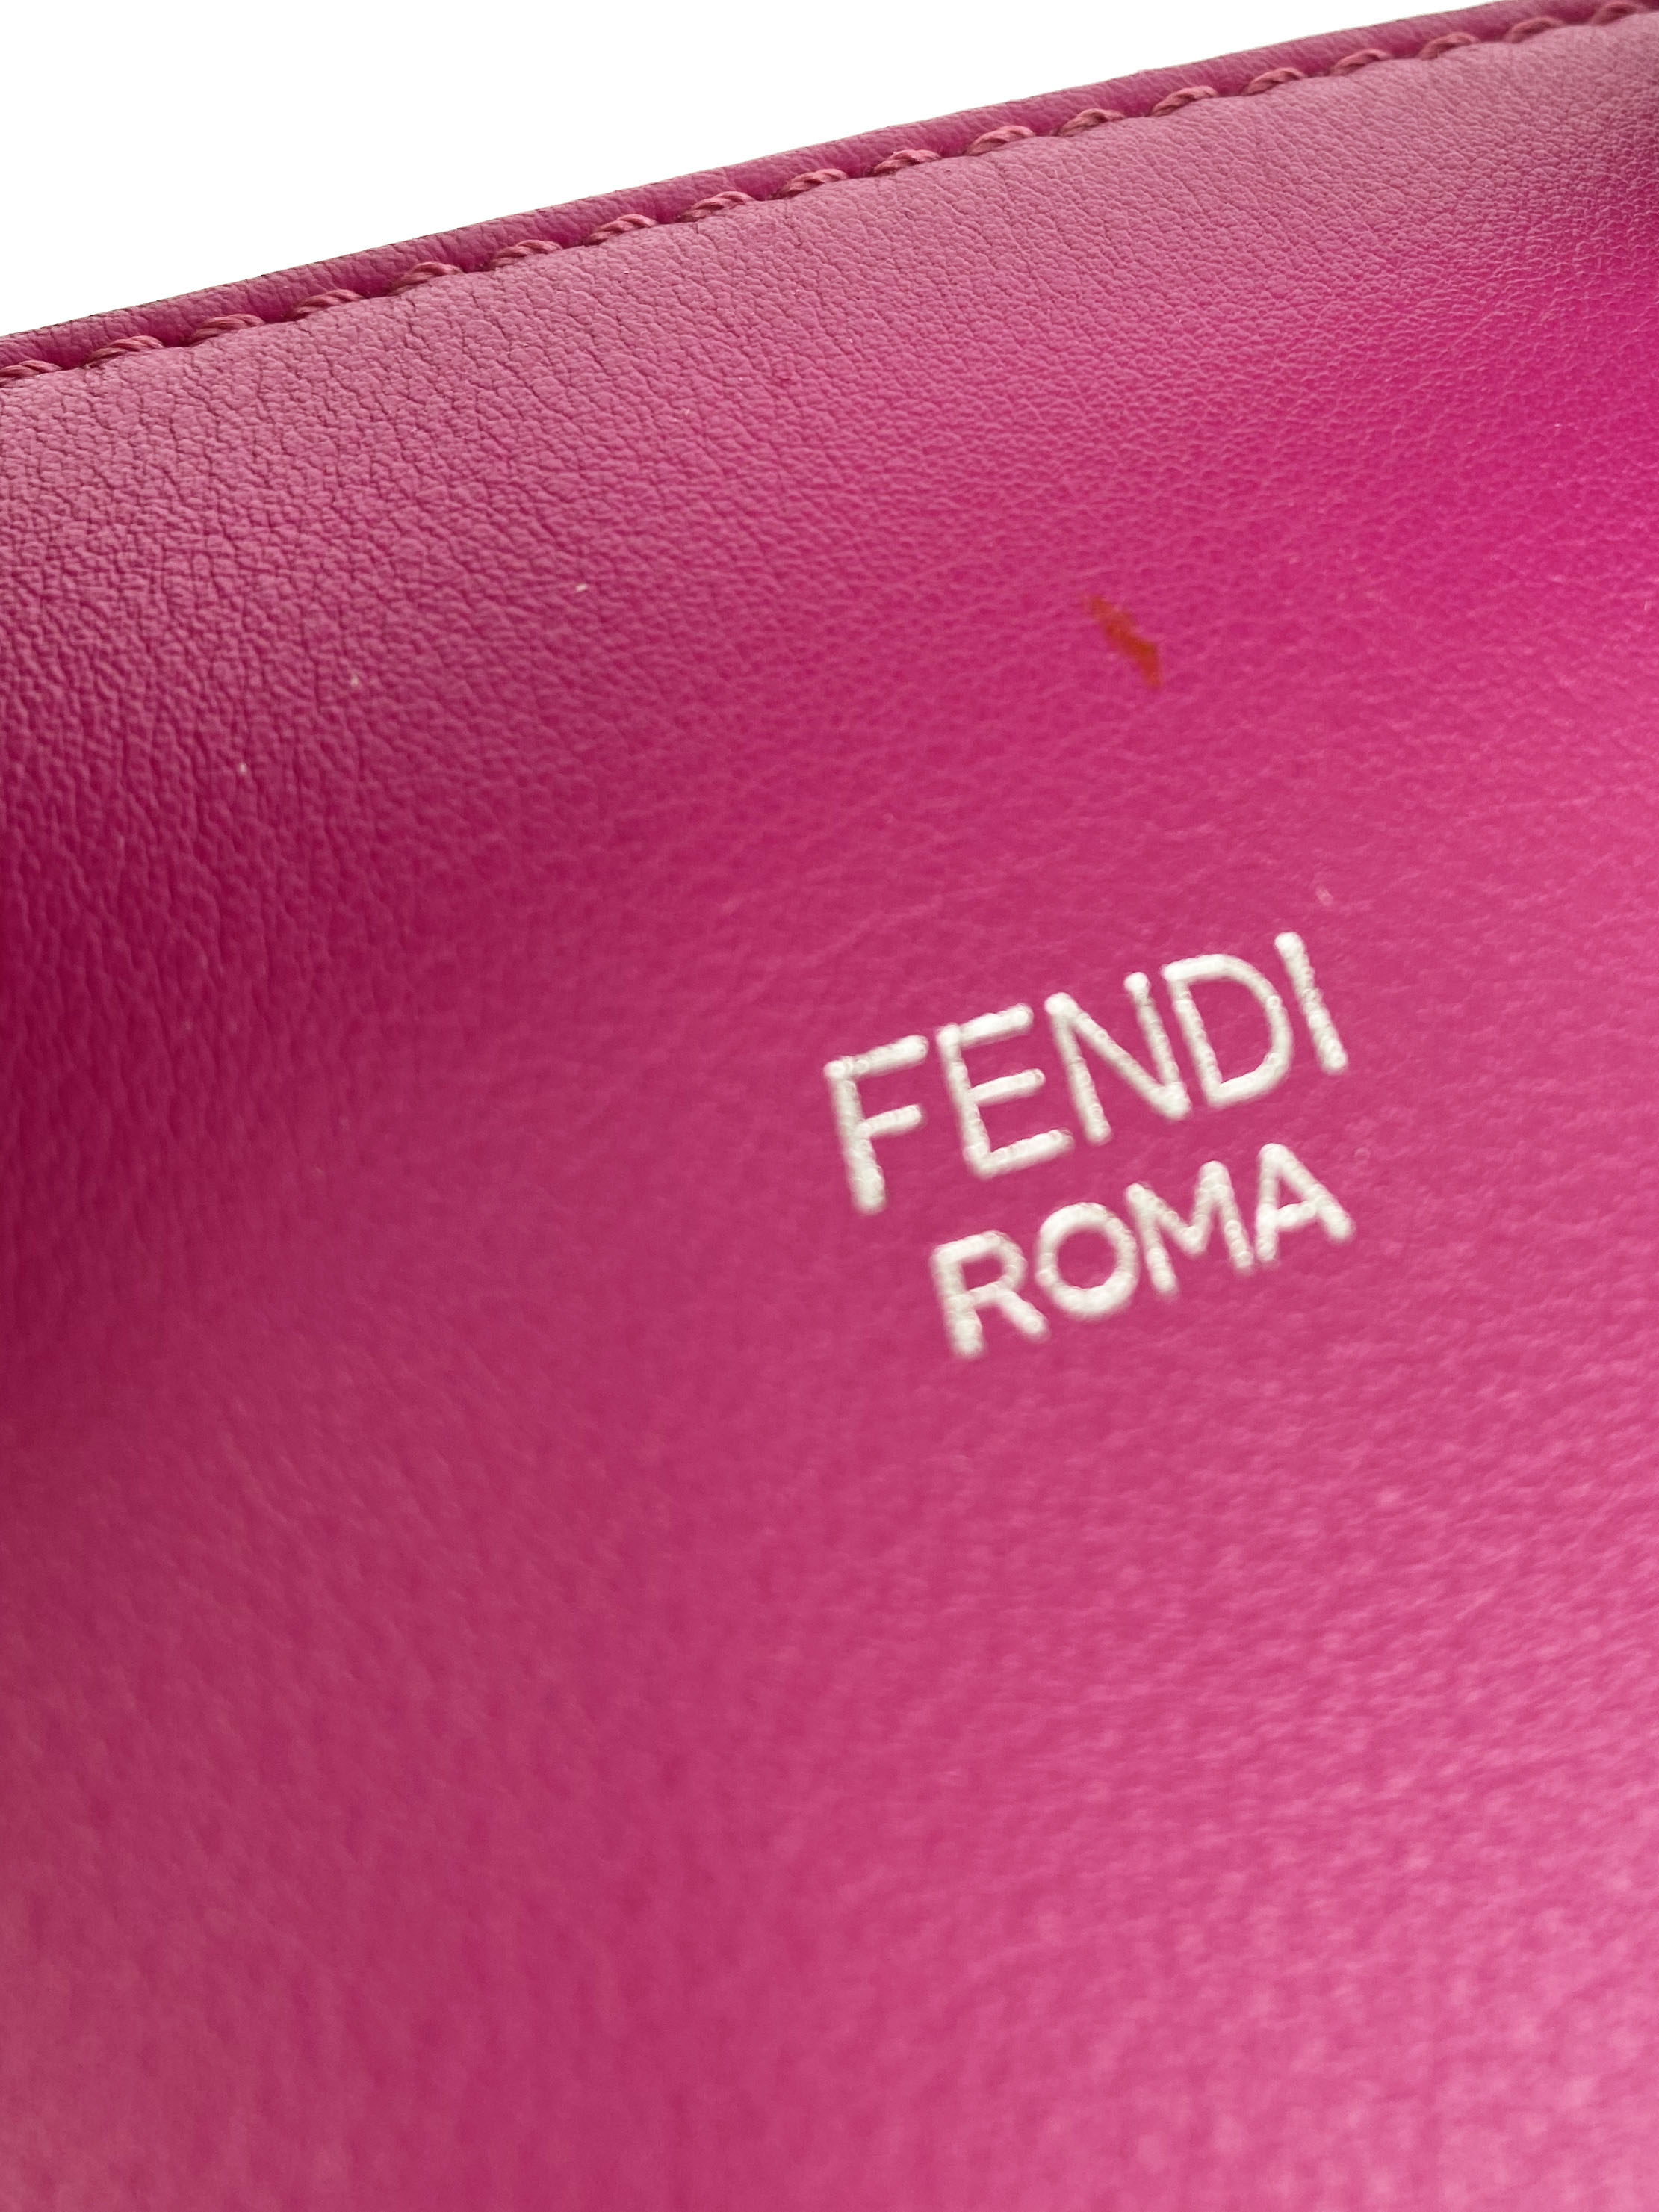 Fendi Mini Pink By the Way Bag